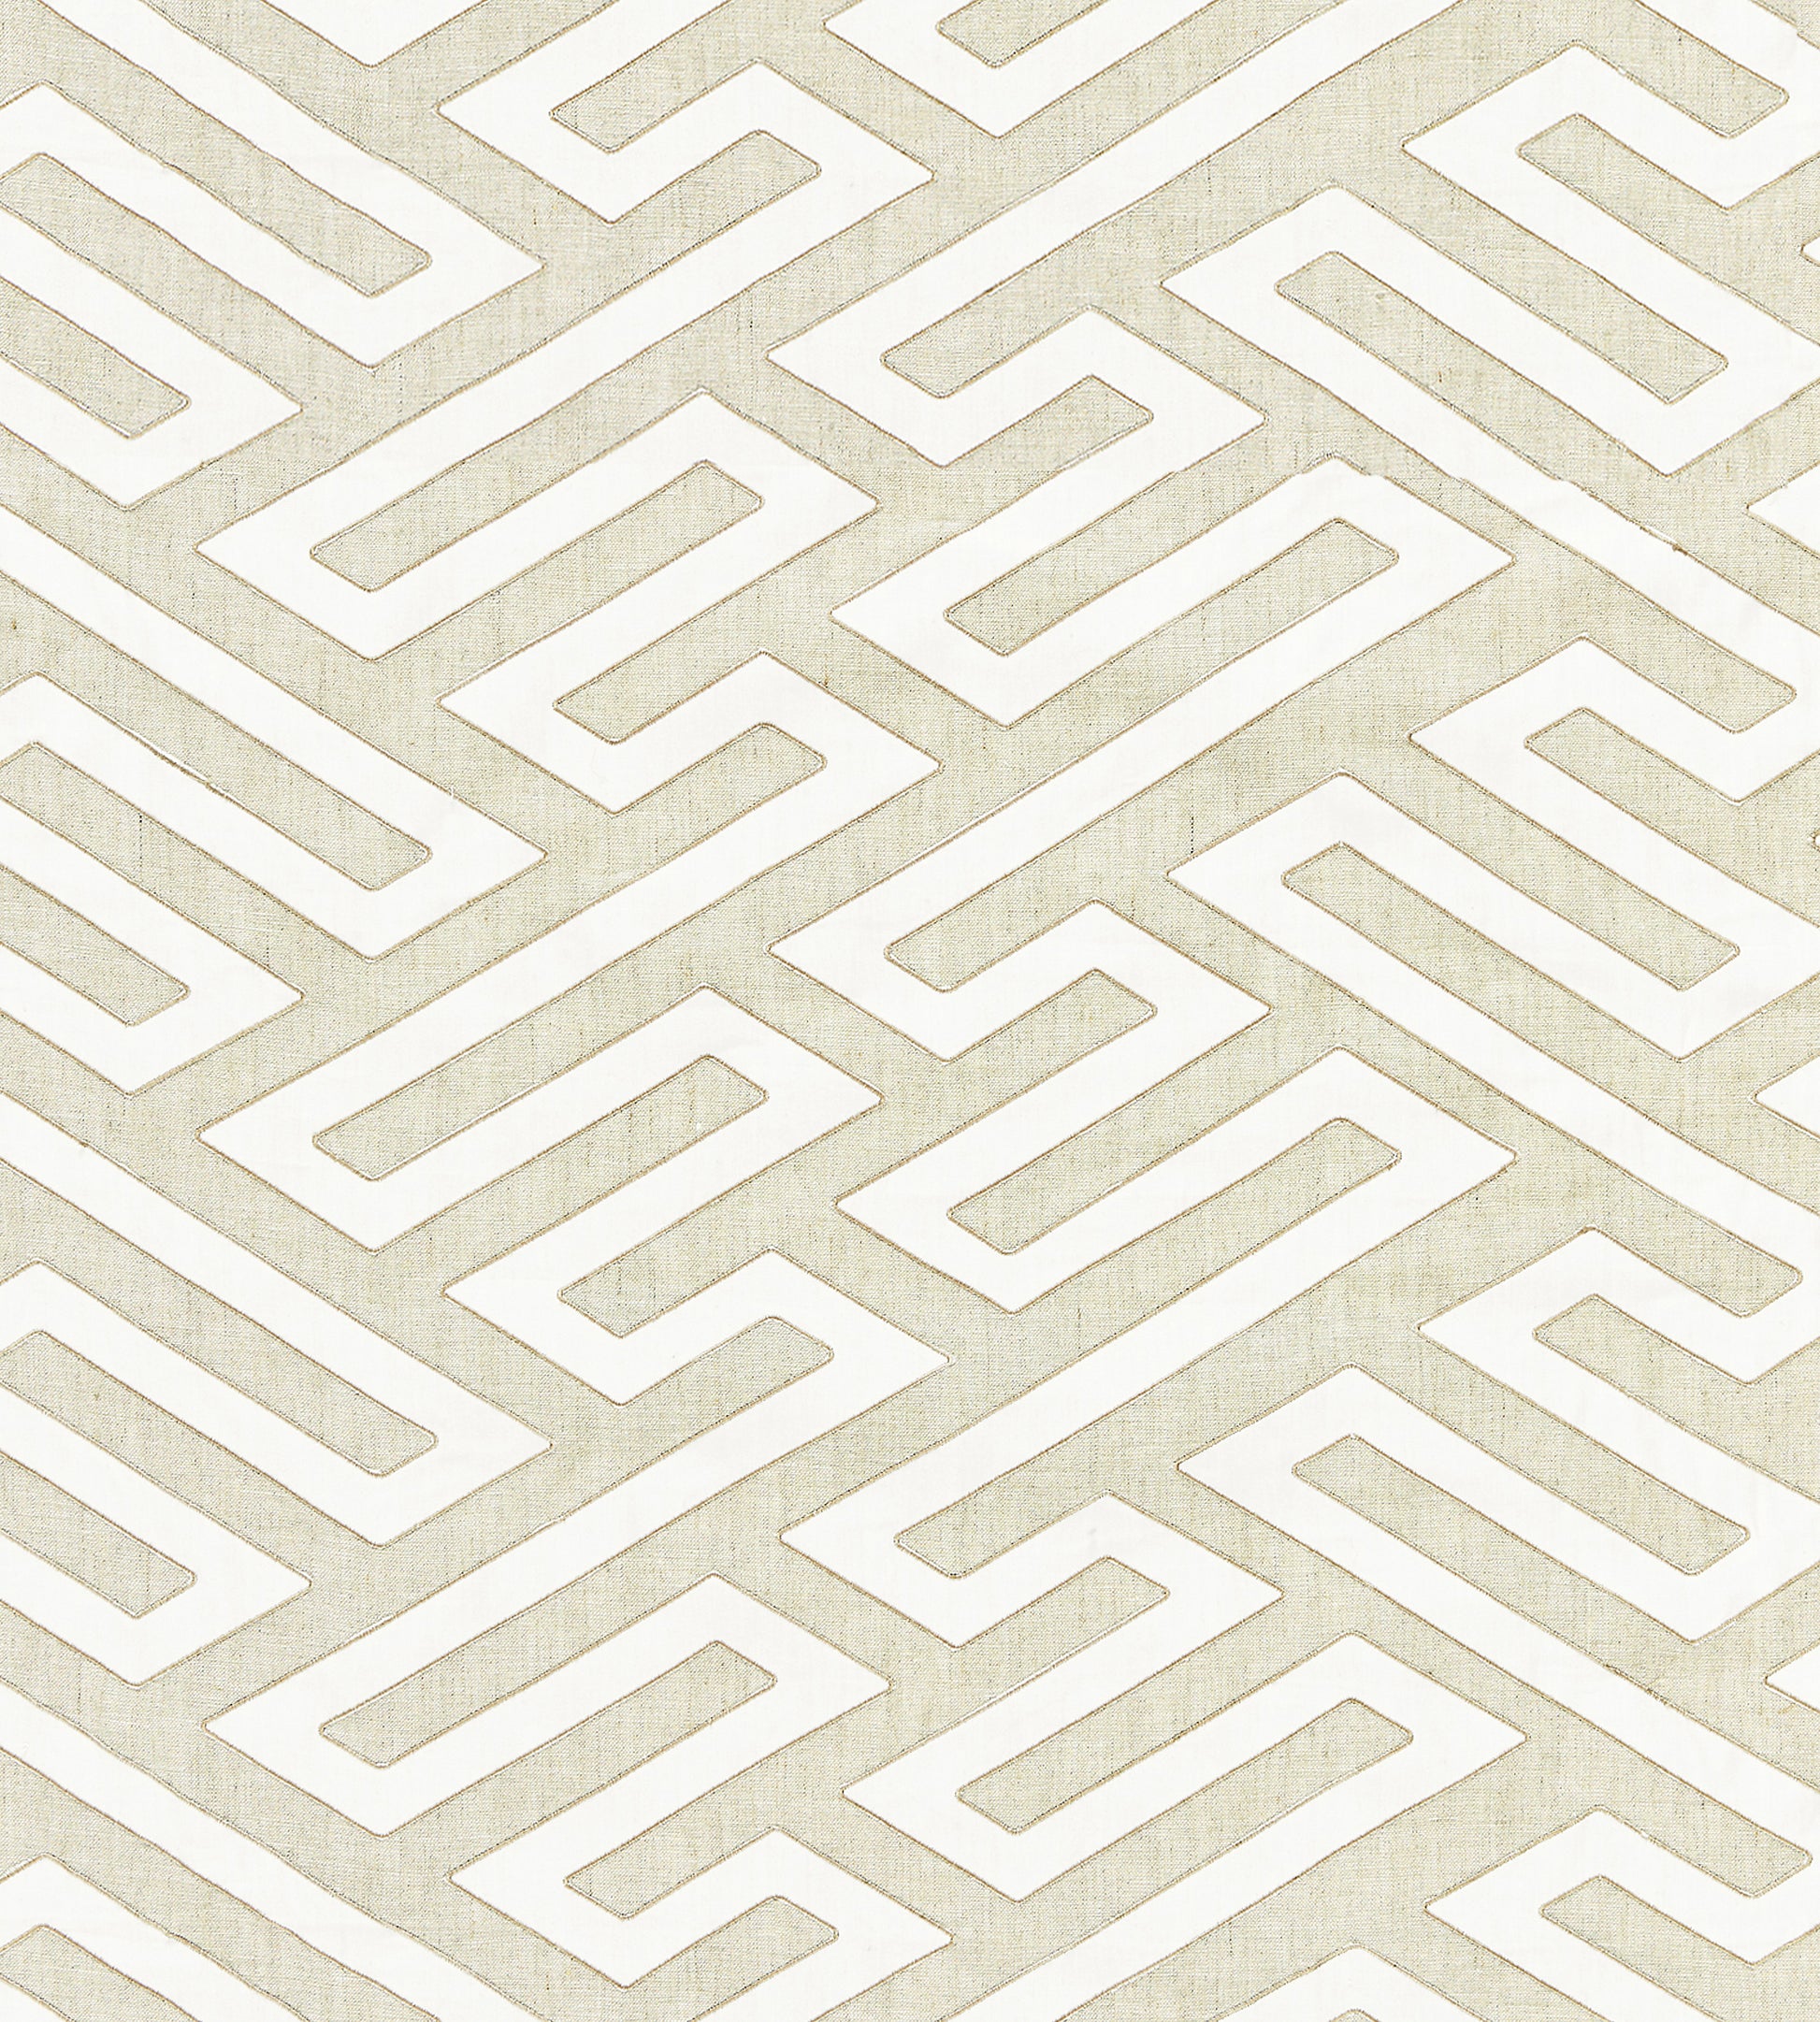 Purchase Scalamandre Fabric Pattern number SC 000127218, Canton Fret Applique Linen 1